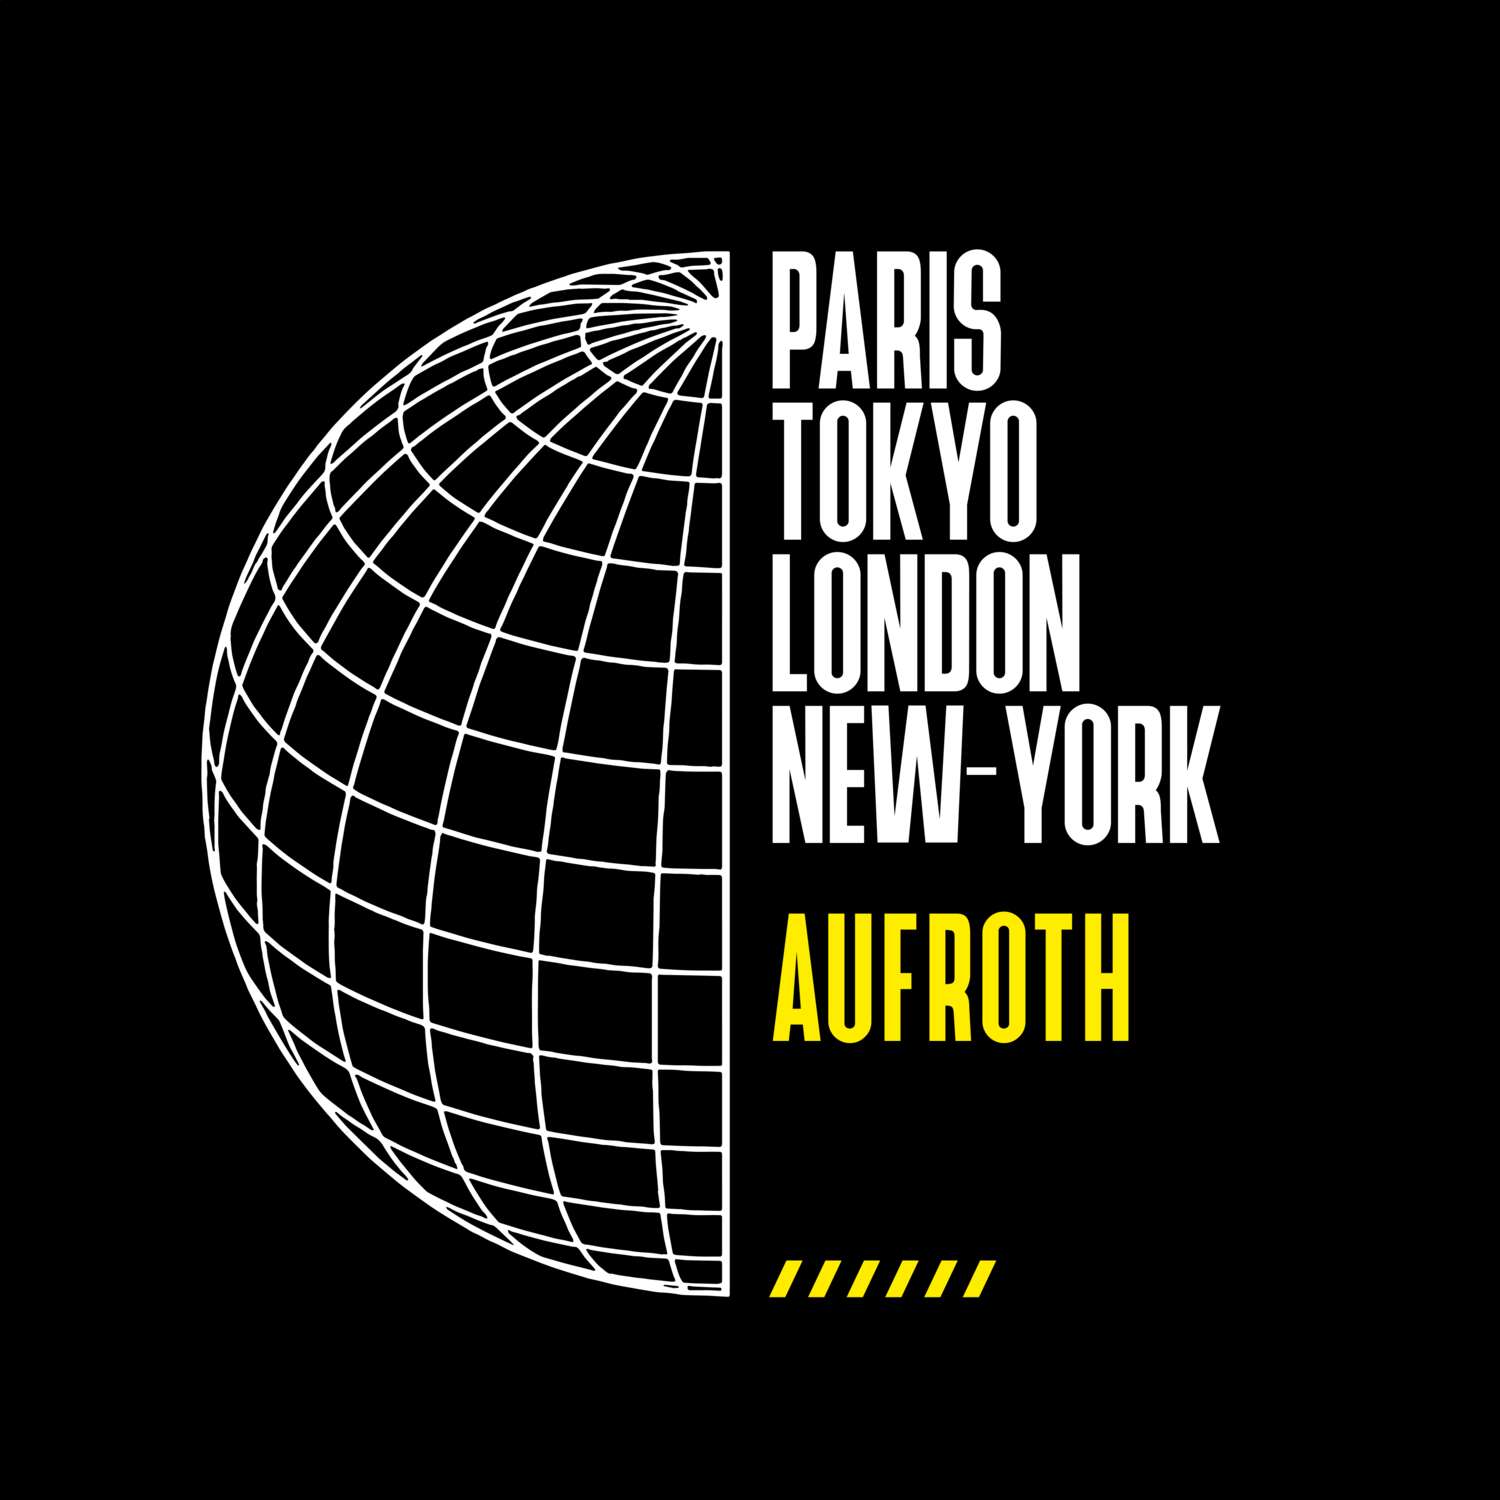 Aufroth T-Shirt »Paris Tokyo London«